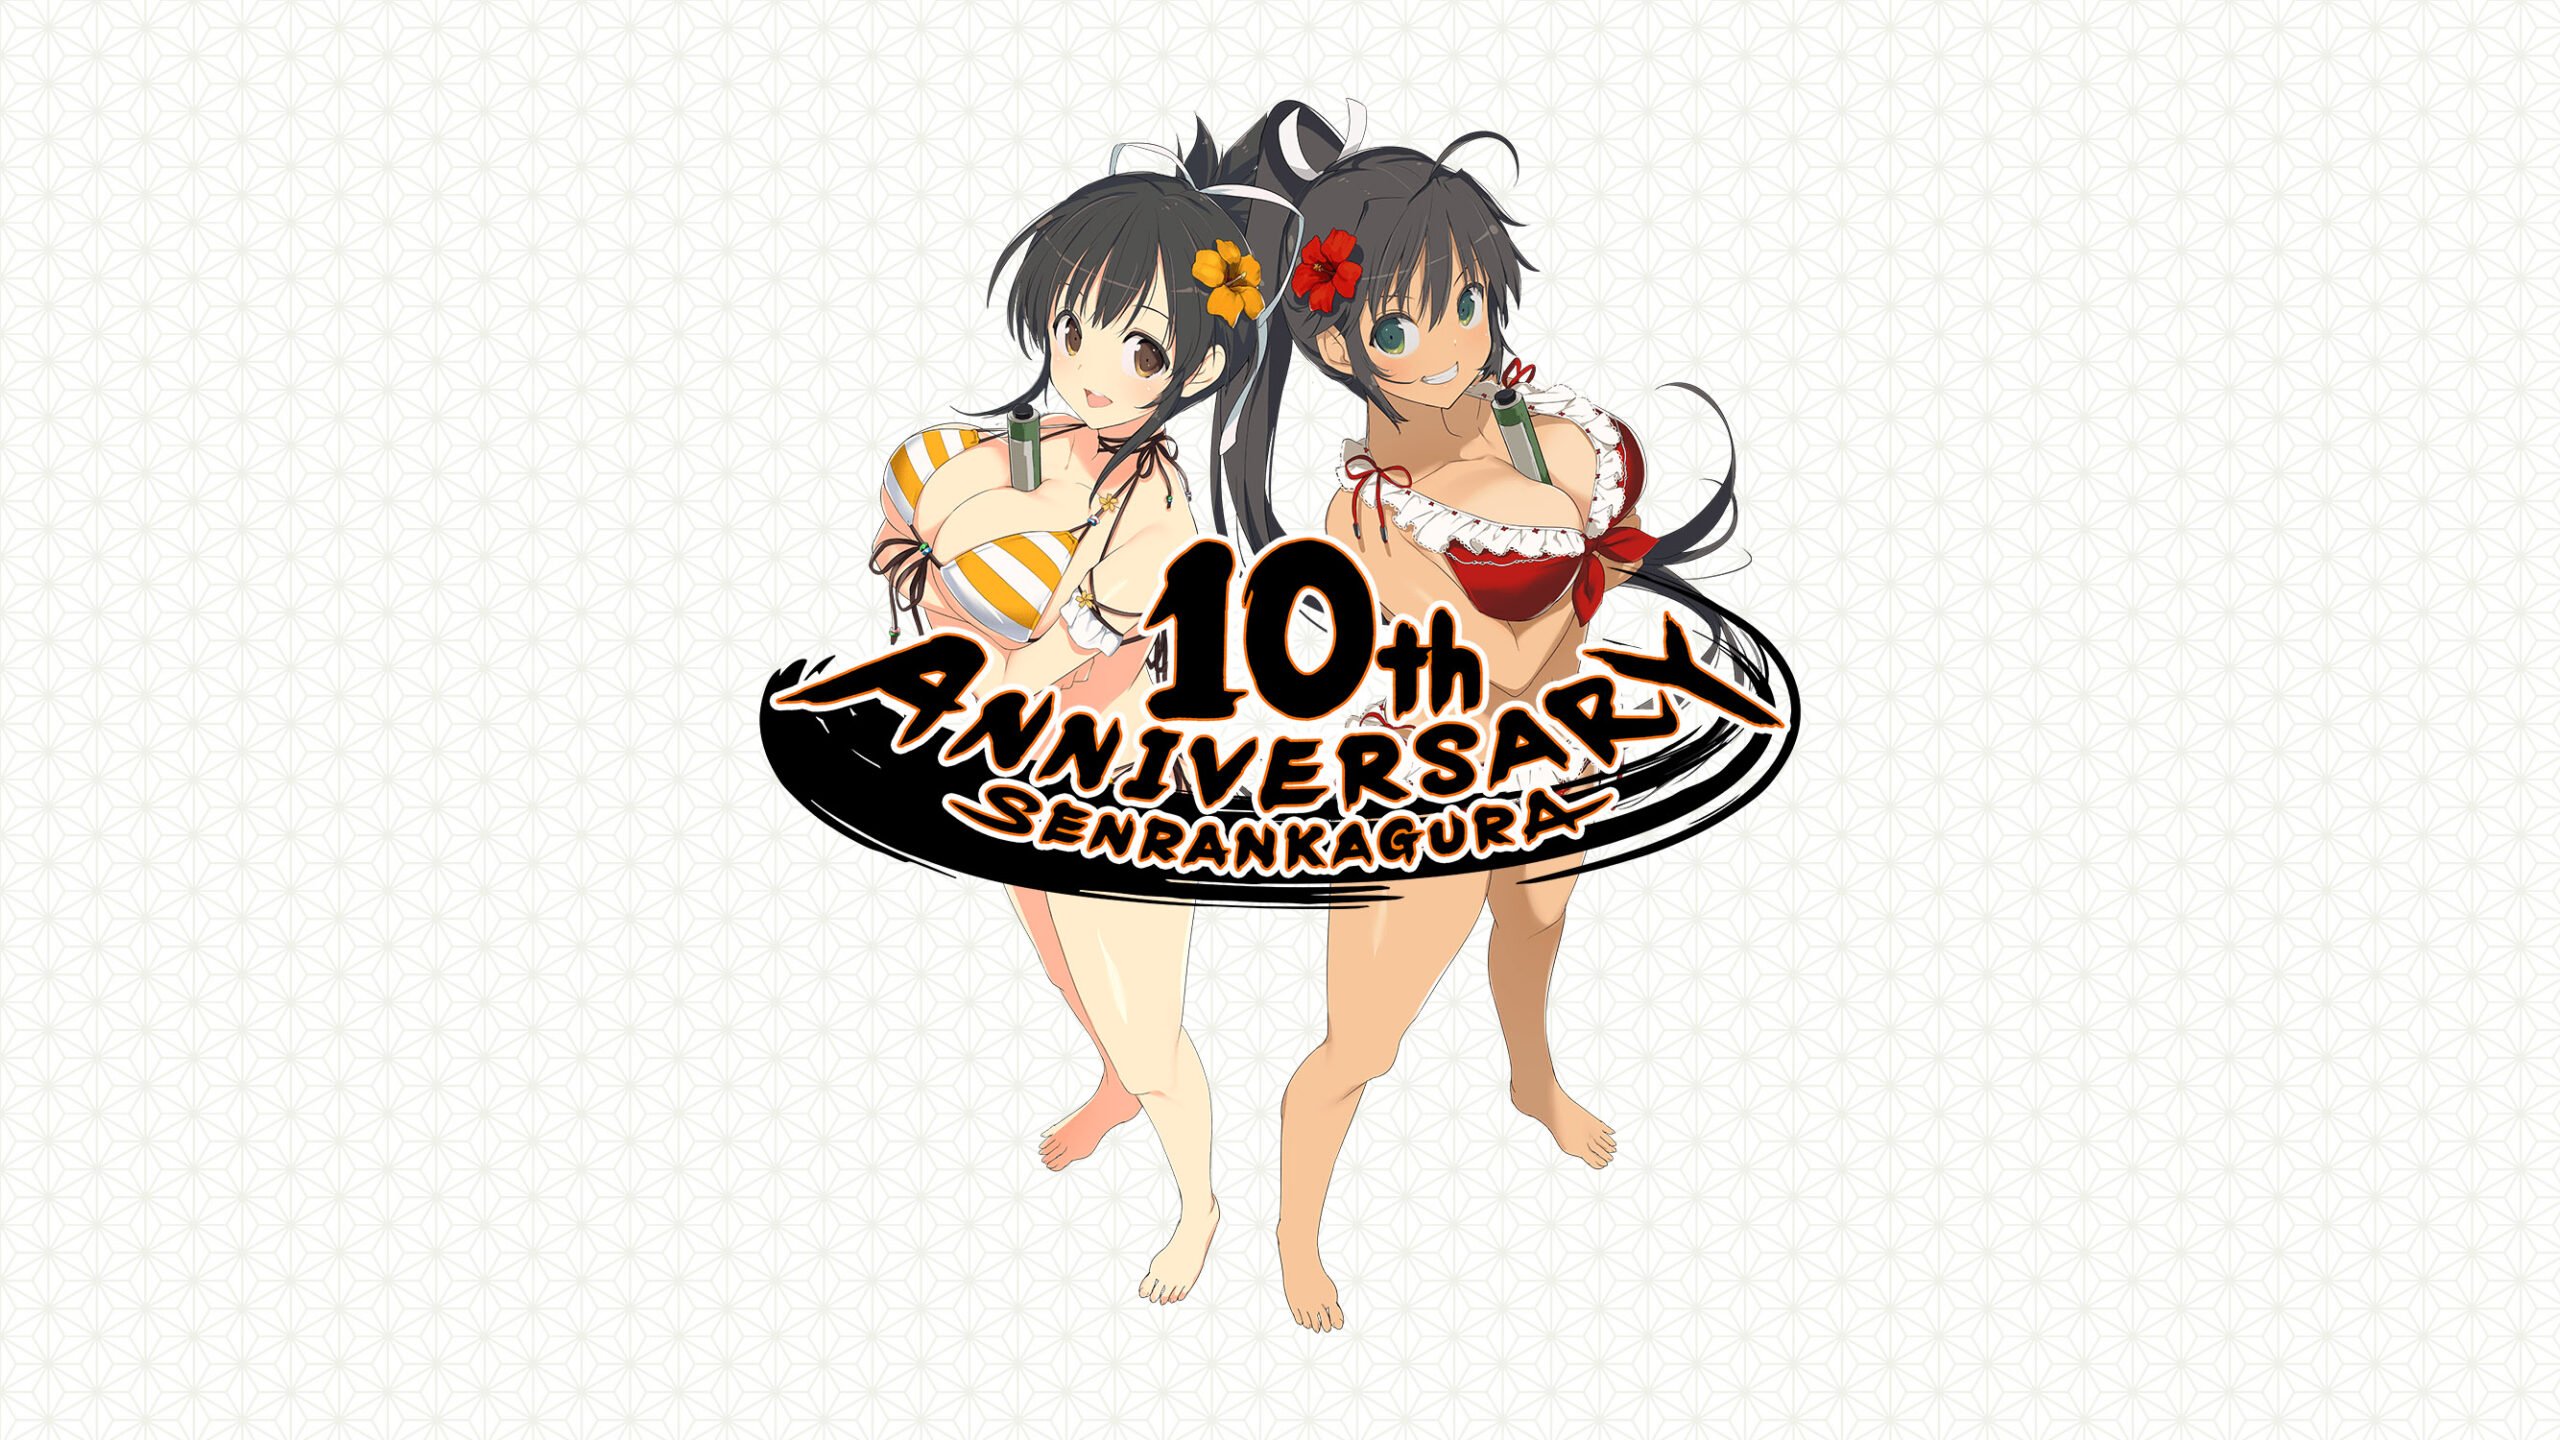 Senran Kagura series 10th anniversary website launched - Gematsu